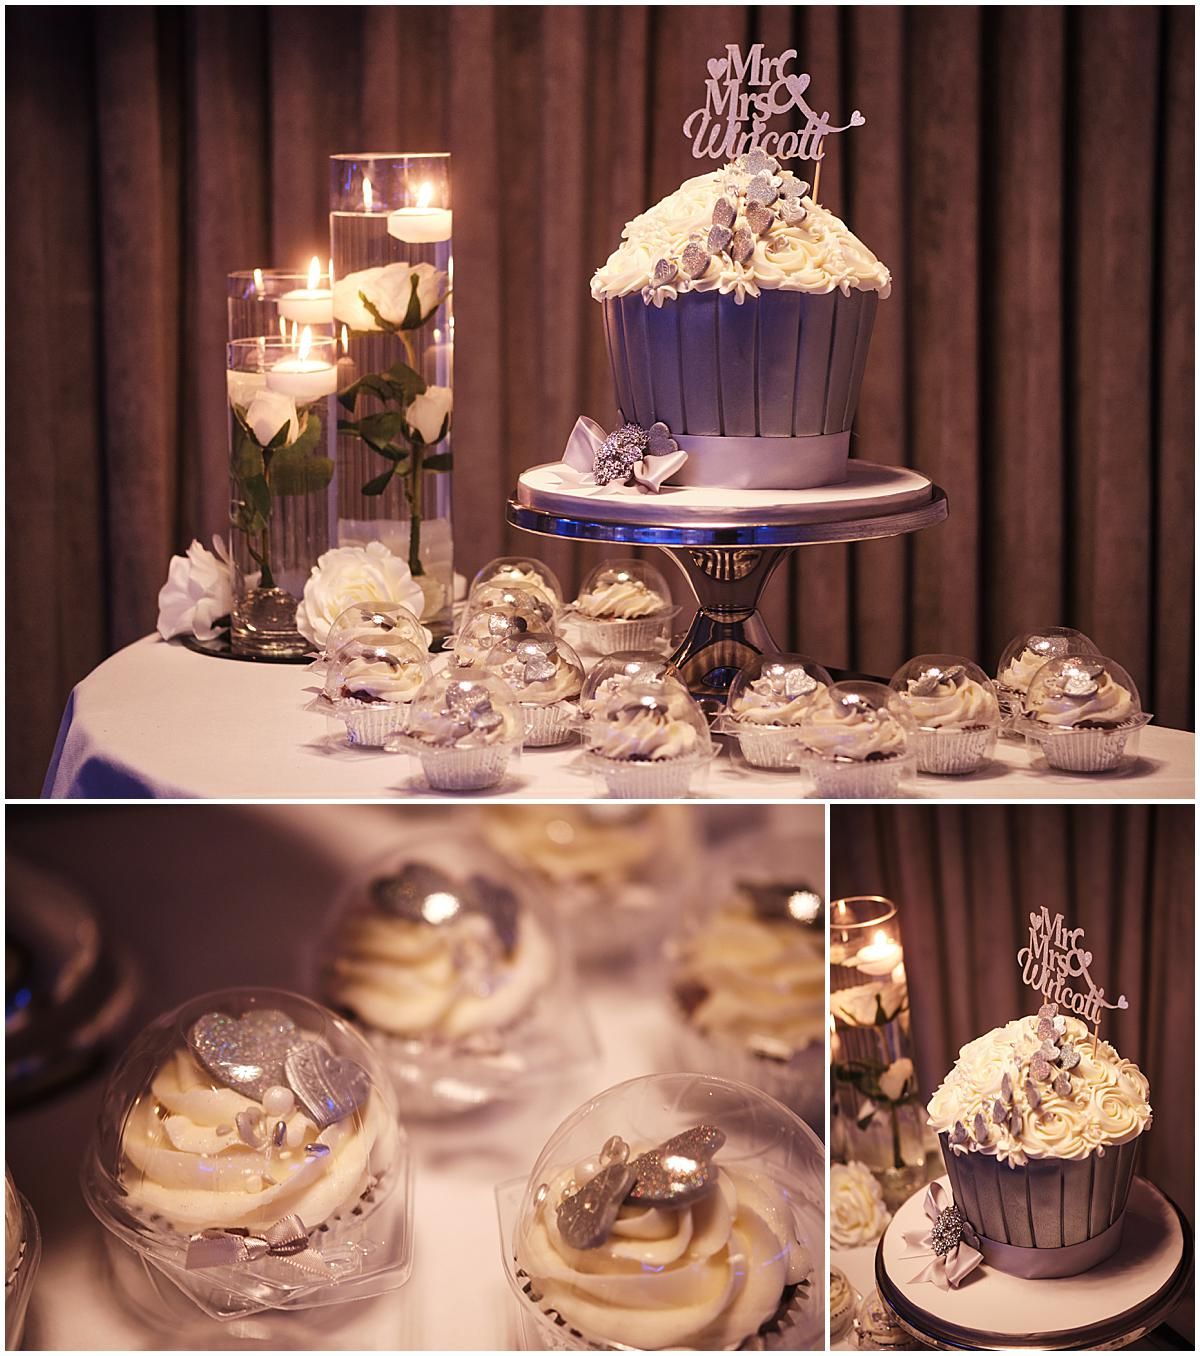 Creative weddings cakes by Cake Fantastique